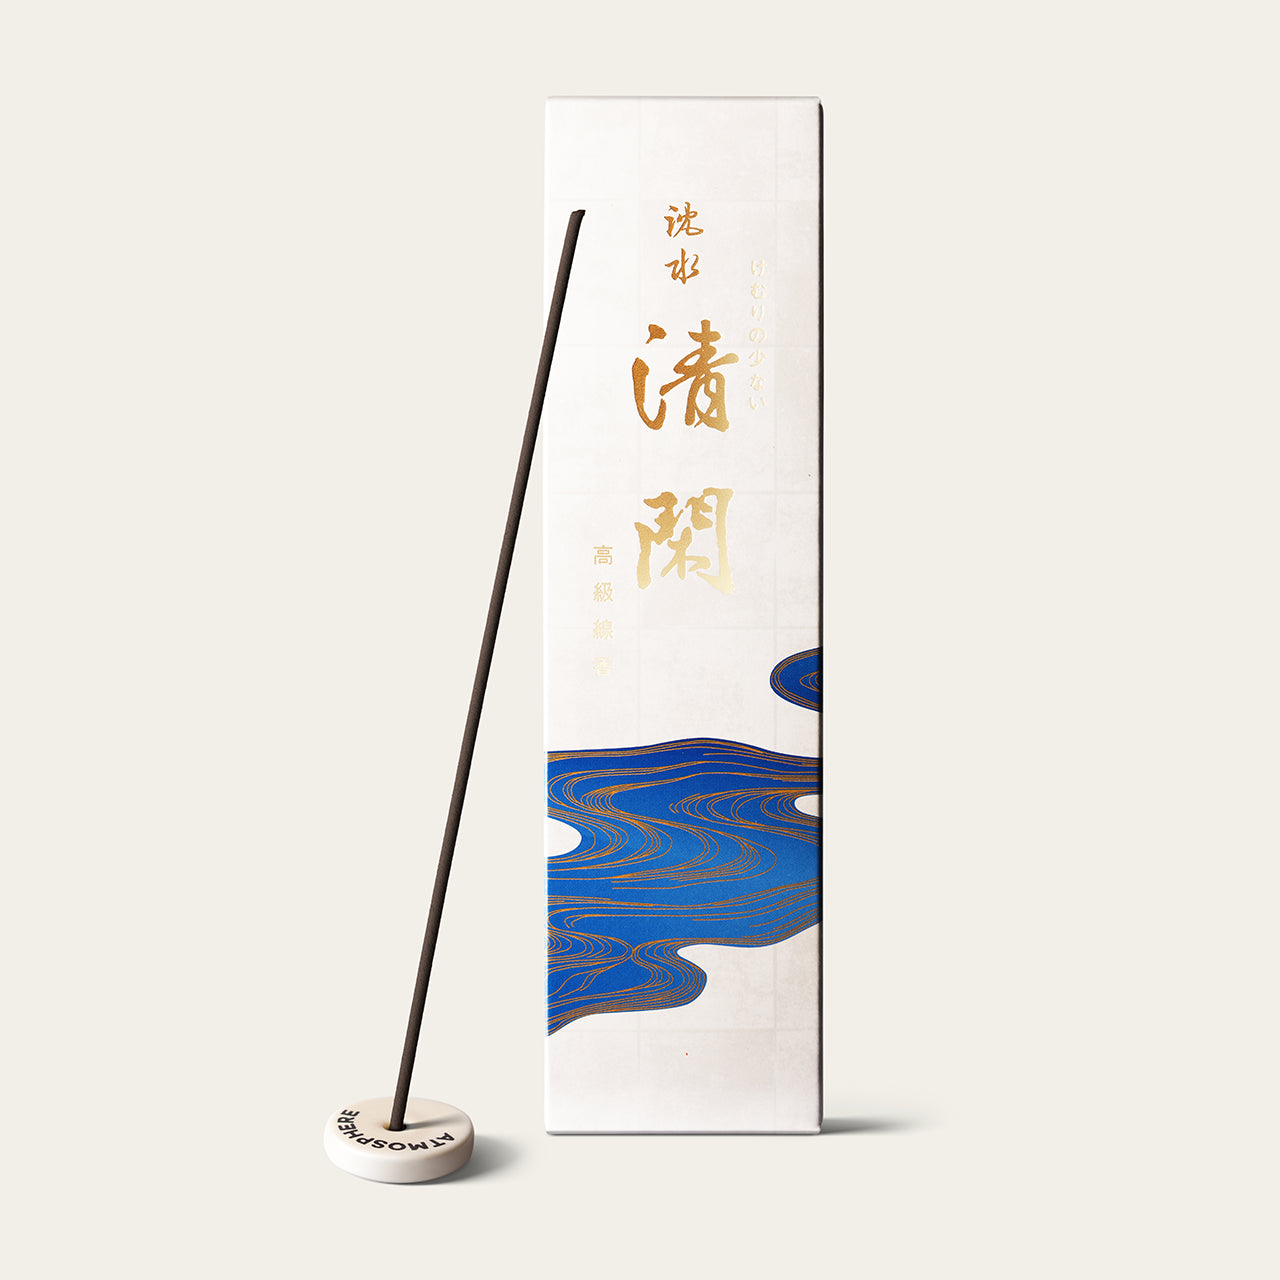 Gyokushodo Jinsui Seikan Quiet Stream Japanese incense sticks (25 sticks) with Atmosphere ceramic incense holder